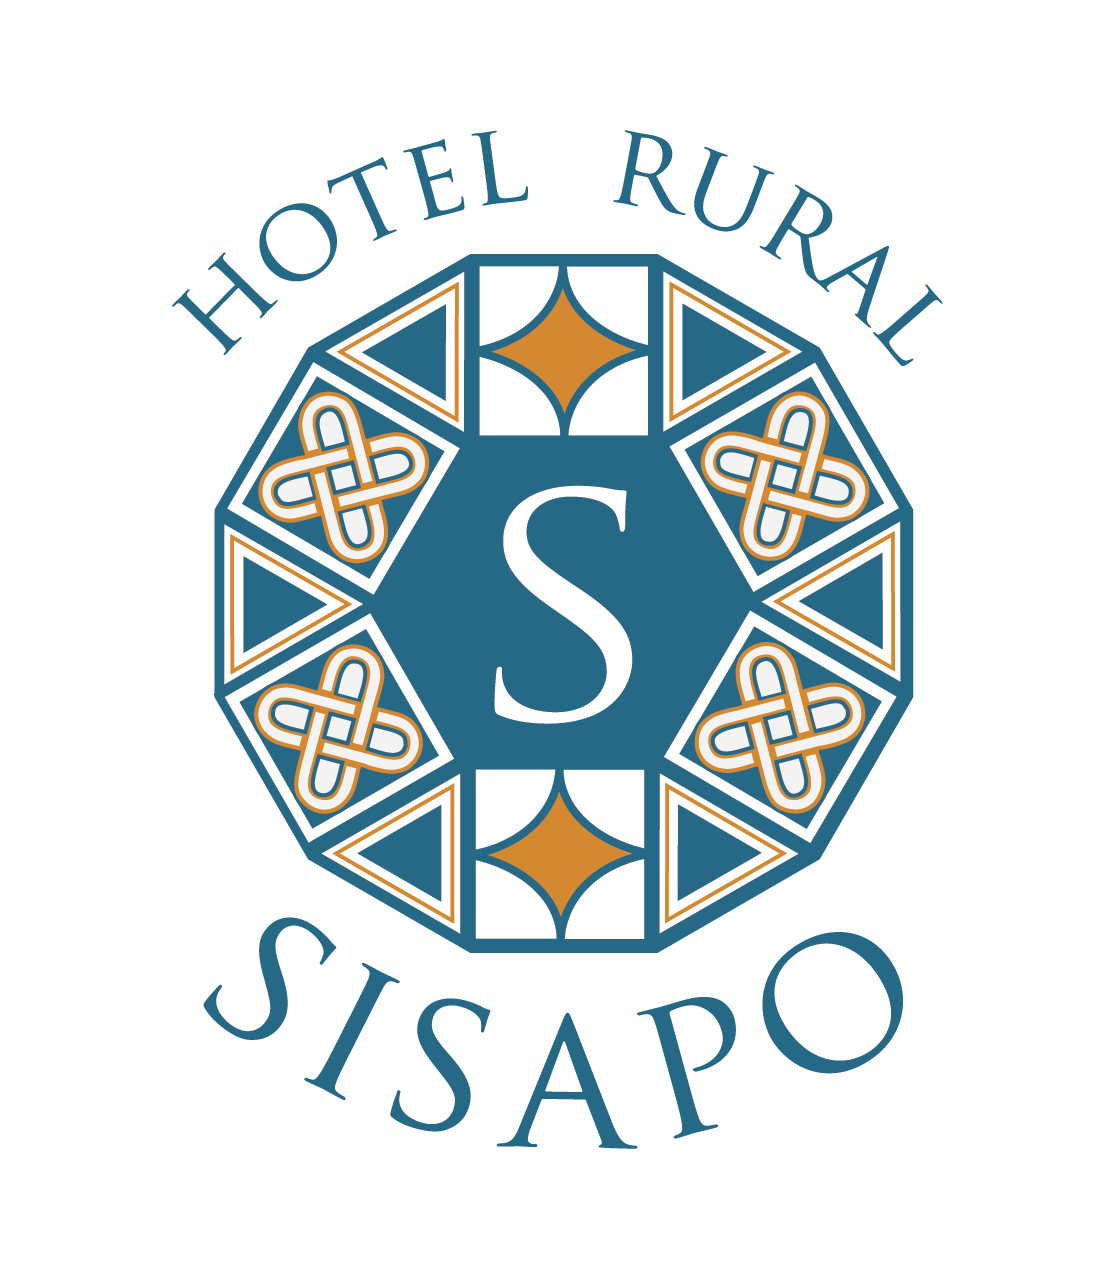 Hotel Sisapo